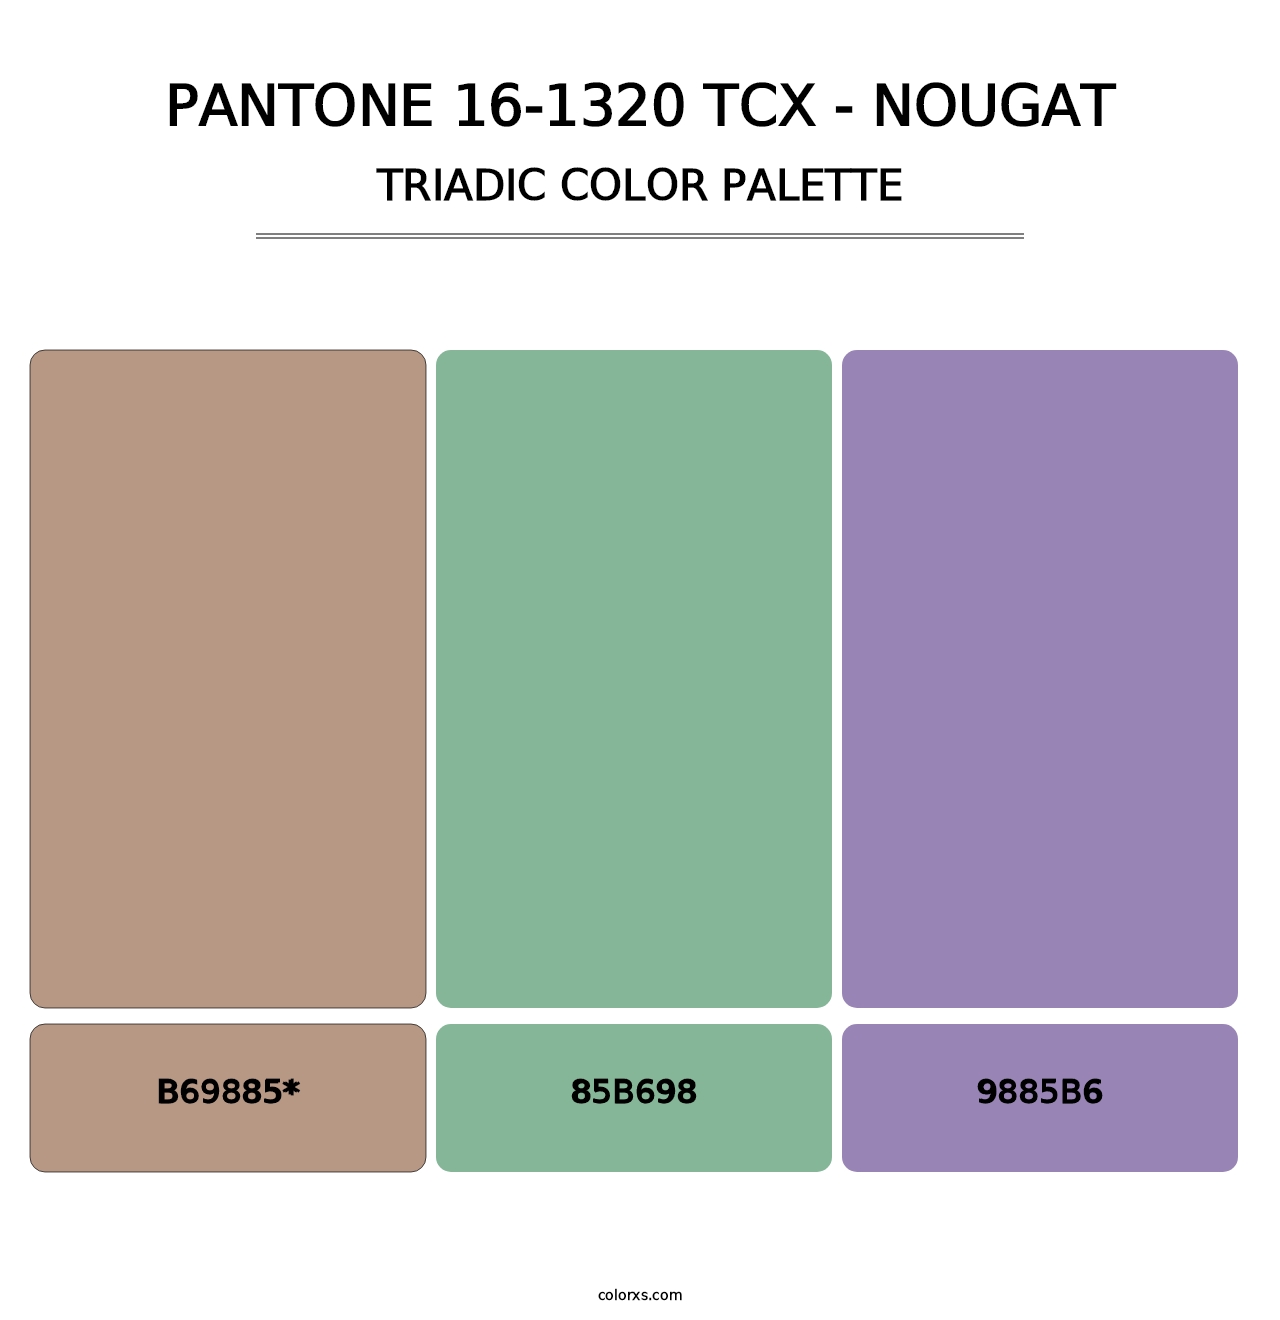 PANTONE 16-1320 TCX - Nougat - Triadic Color Palette